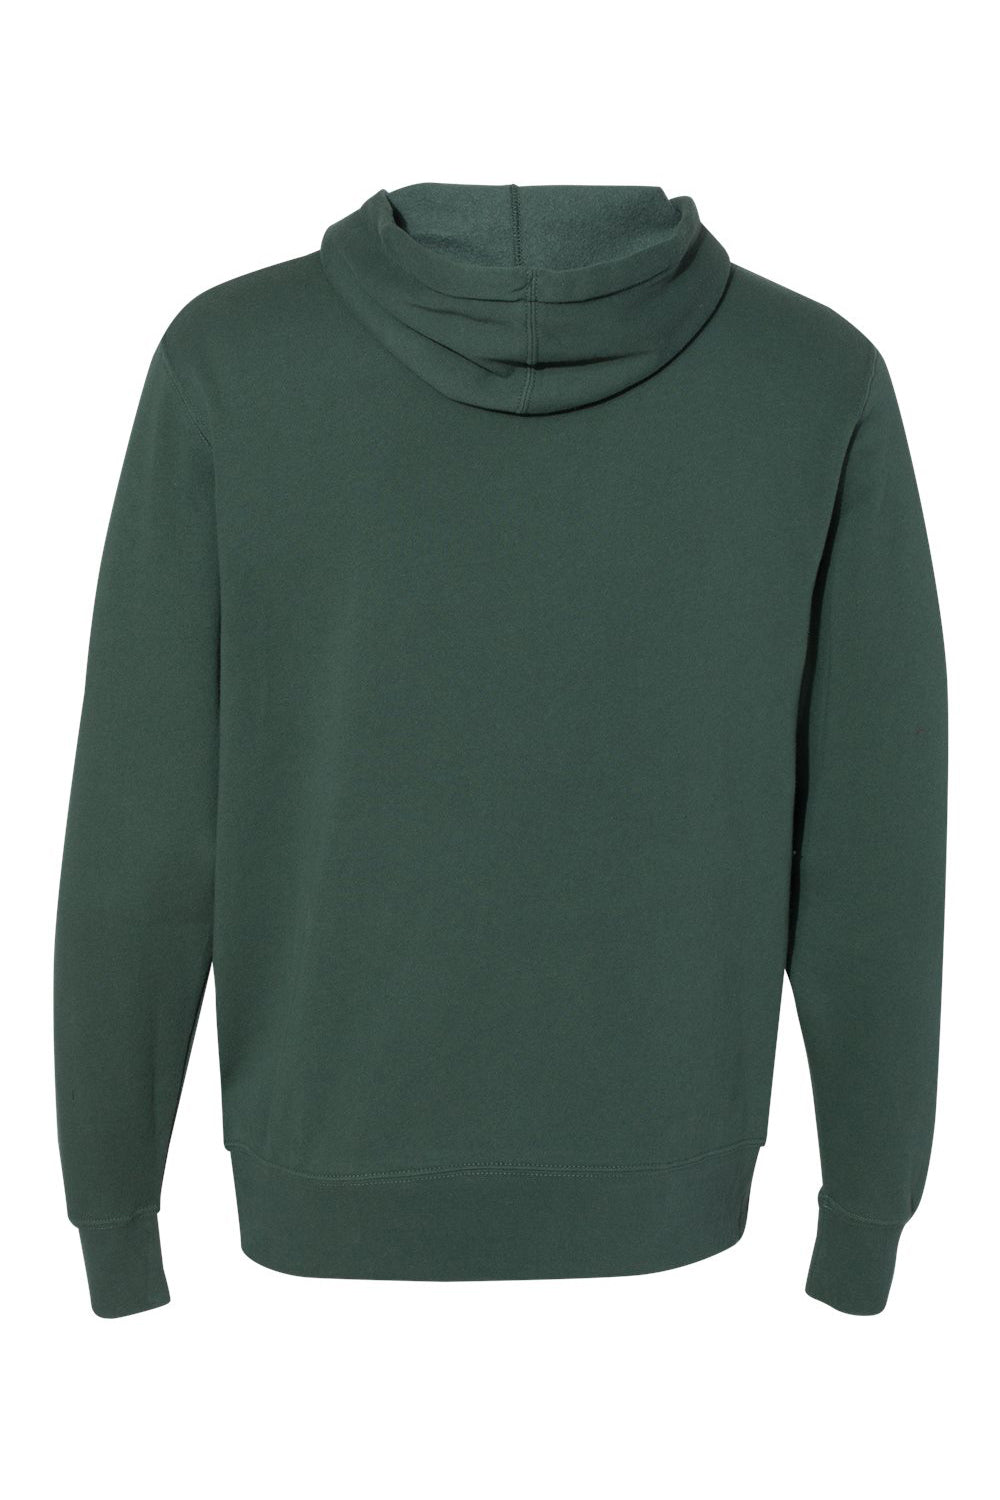 Independent Trading Co. AFX90UN Mens Hooded Sweatshirt Hoodie Alpine Green Flat Back